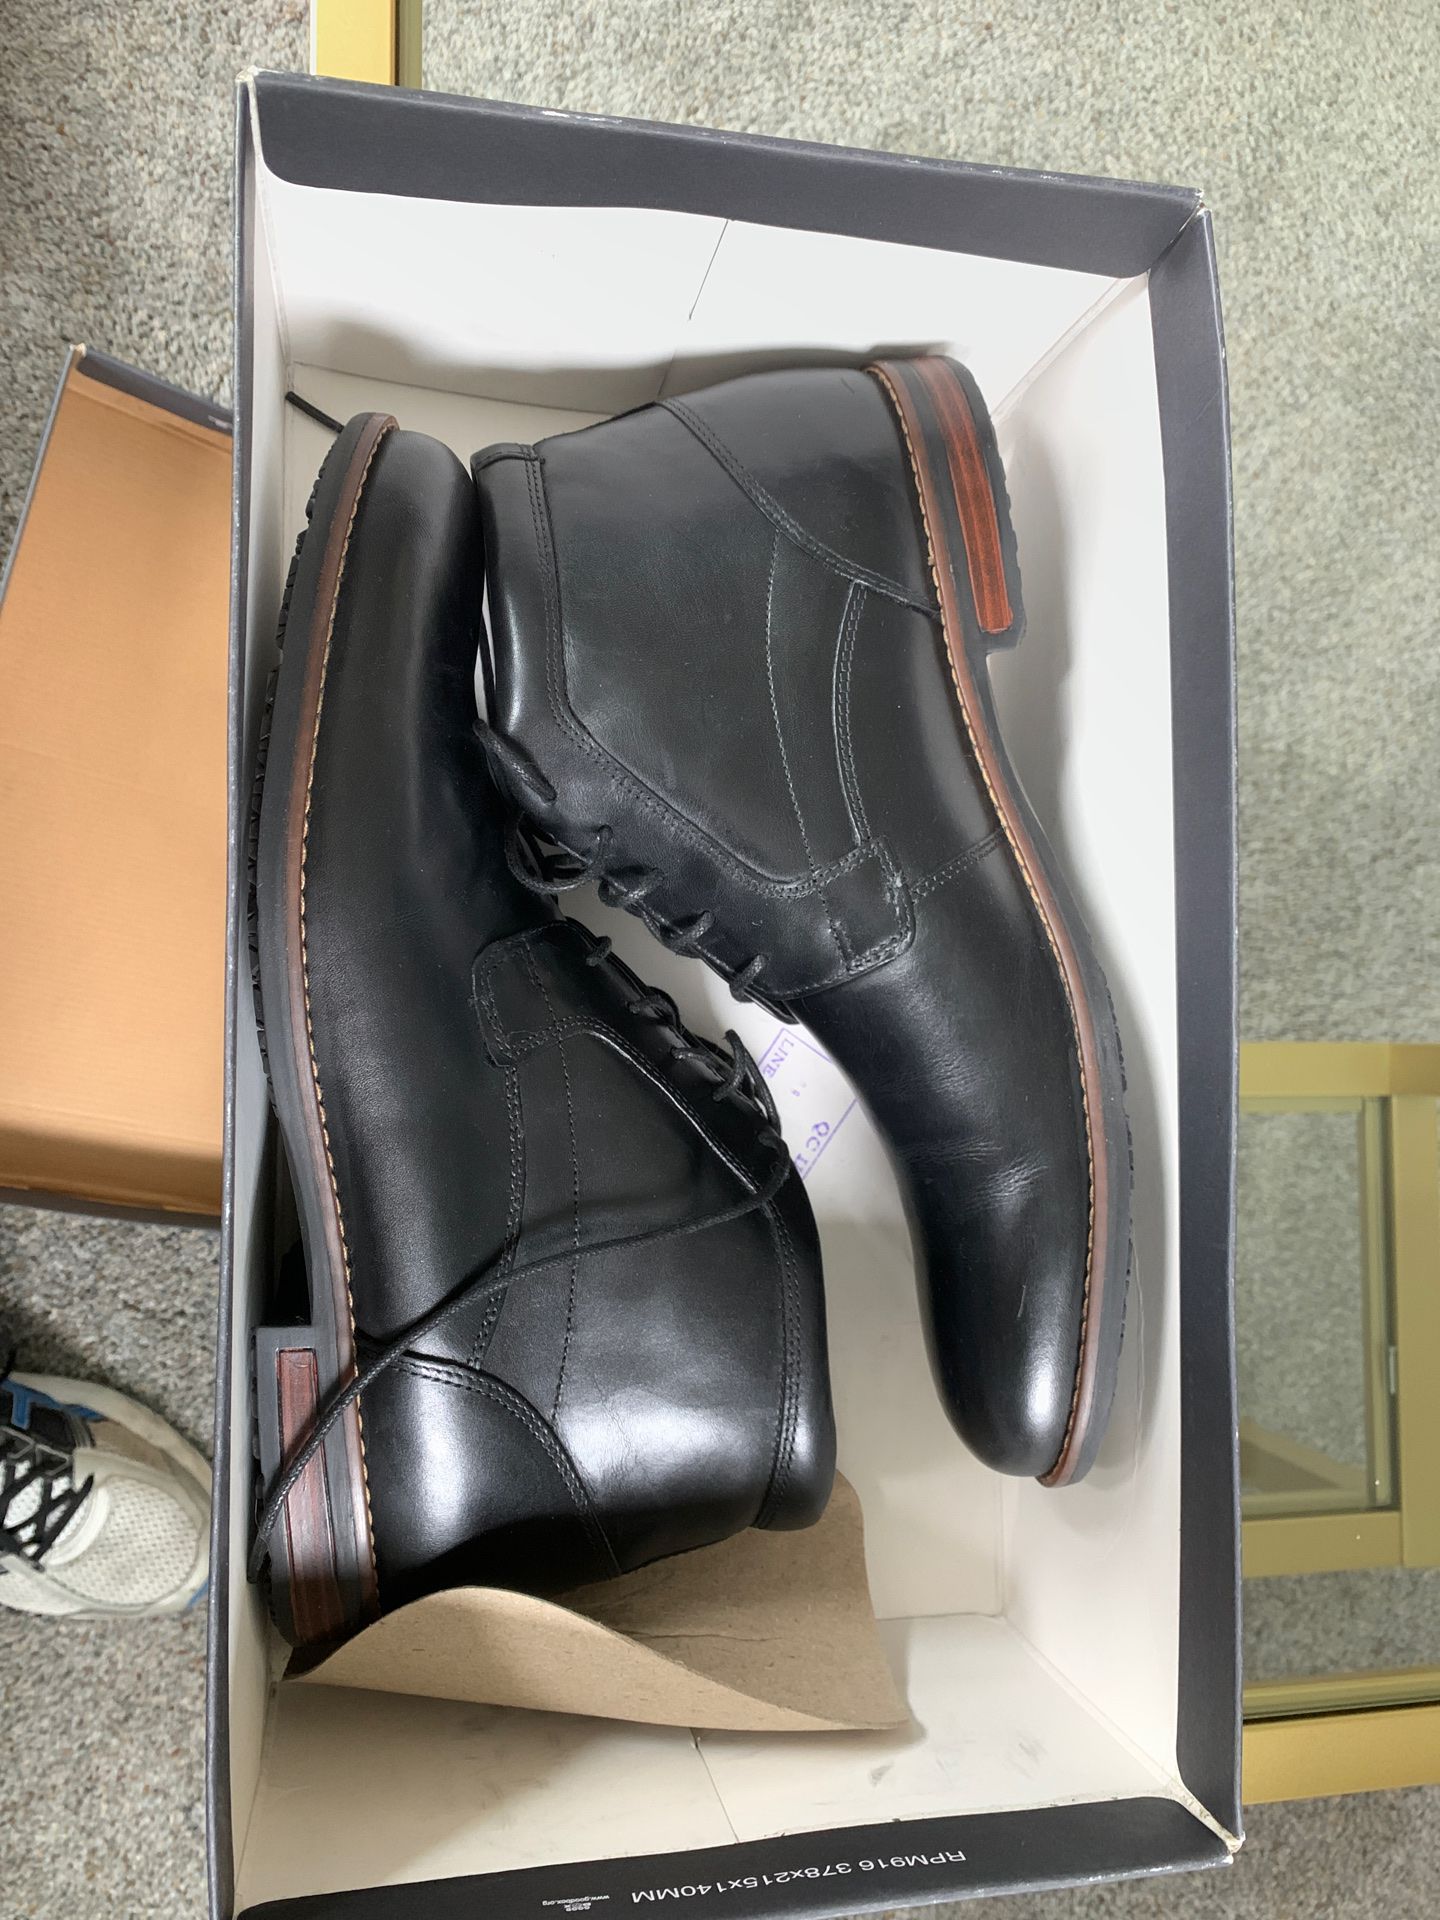 Rockport Dustyn Chukka Black Boots / Shoes size 11.5